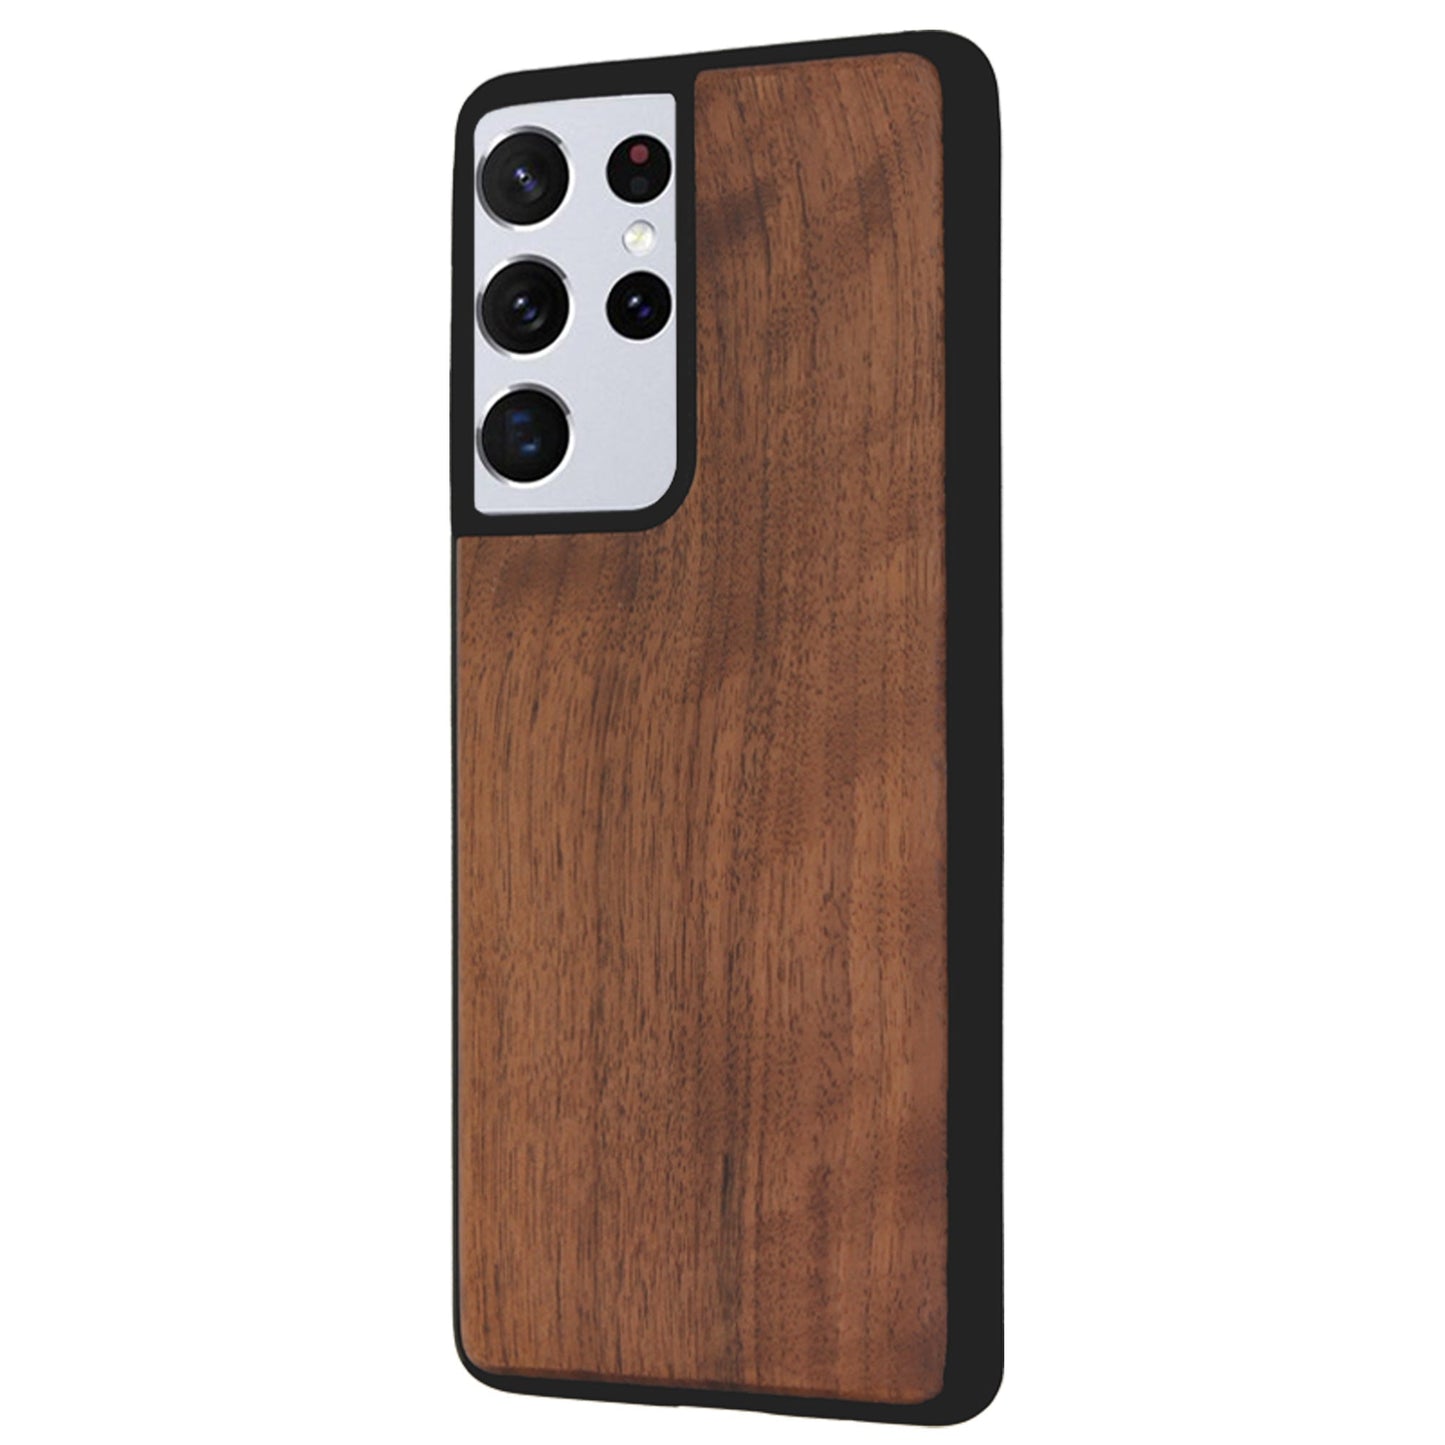 Eden case made of walnut wood for Samsung Galaxy S21 Ultra